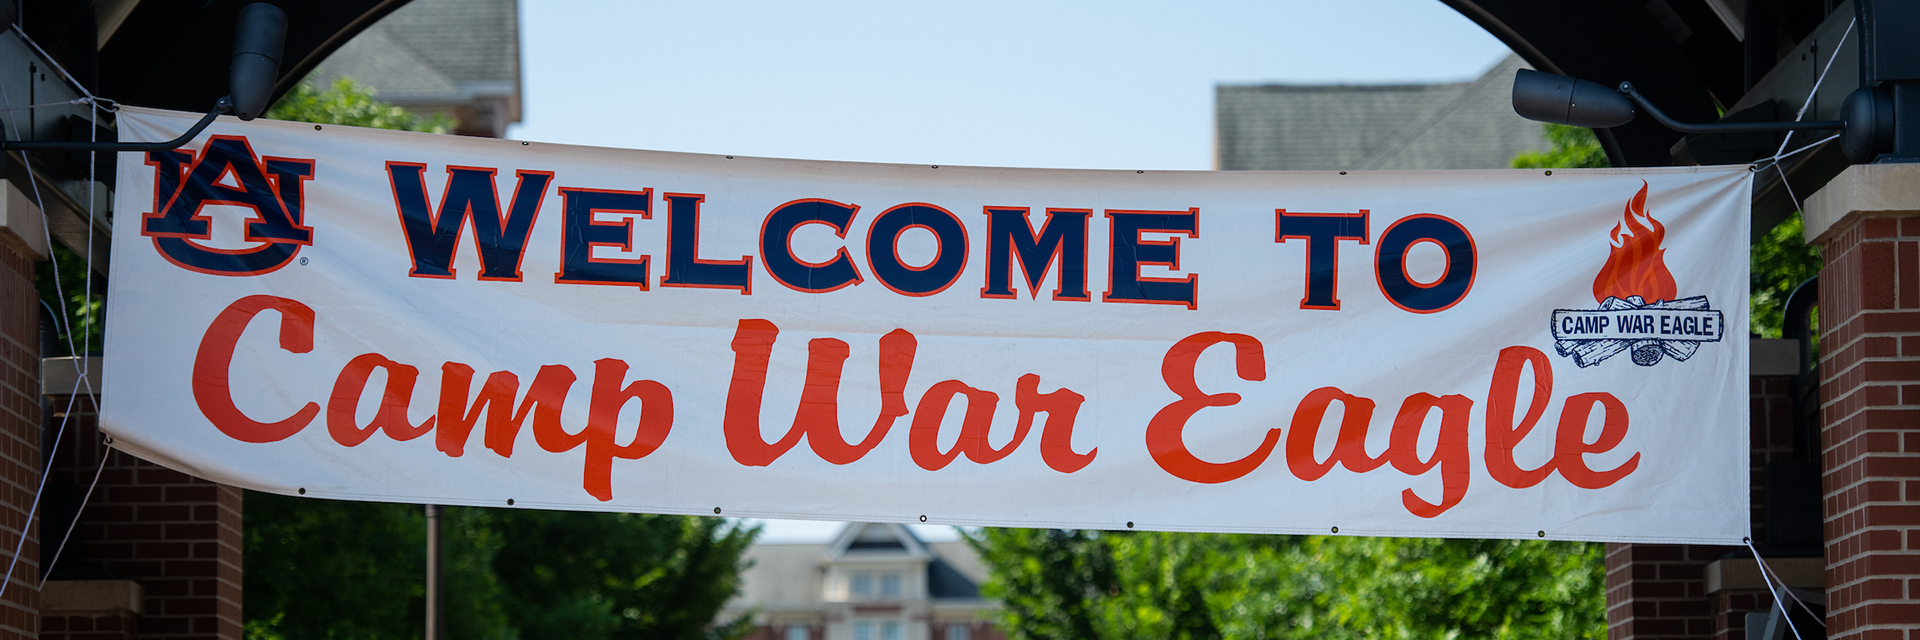 Camp War Eagle welcome banner